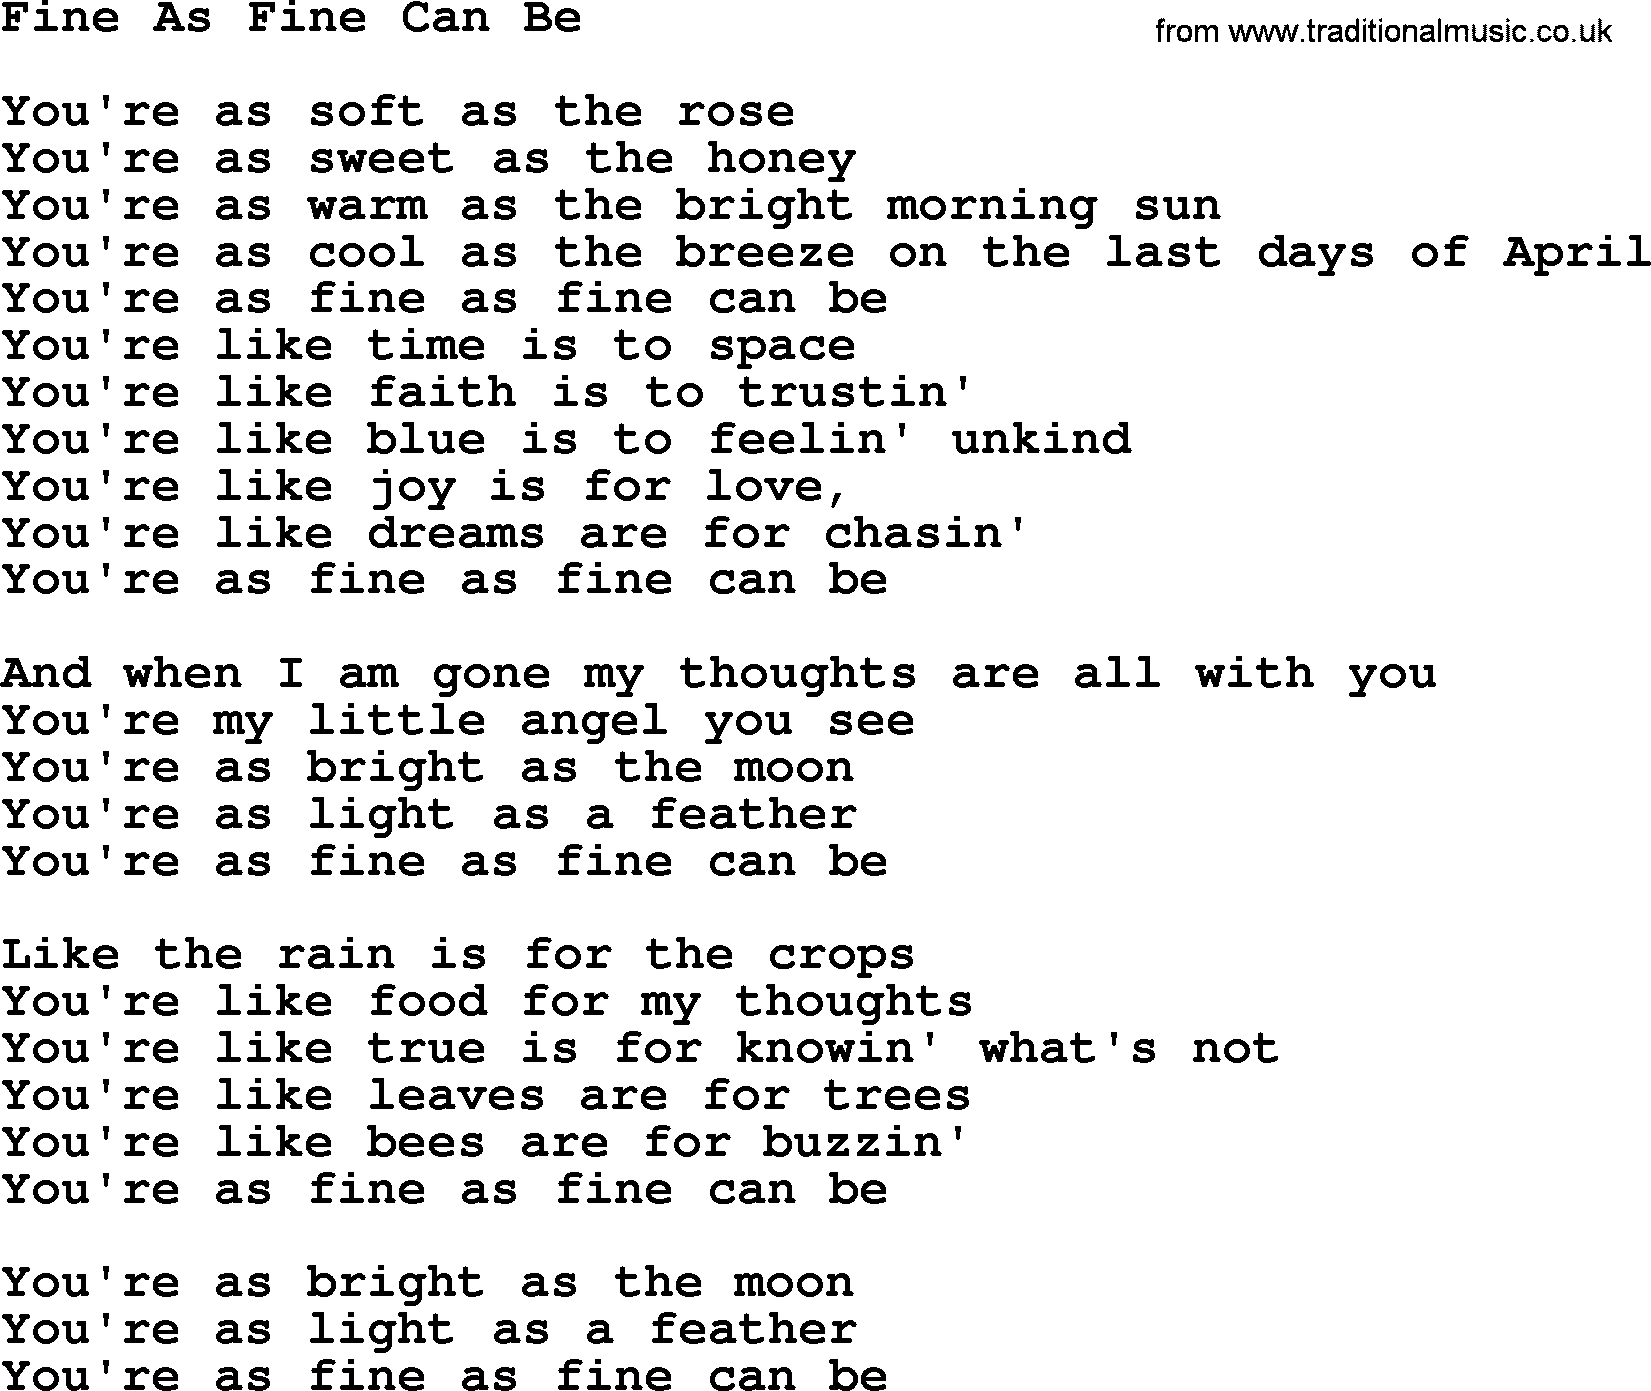 Gordon Lightfoot song Fine As Fine Can Be, lyrics